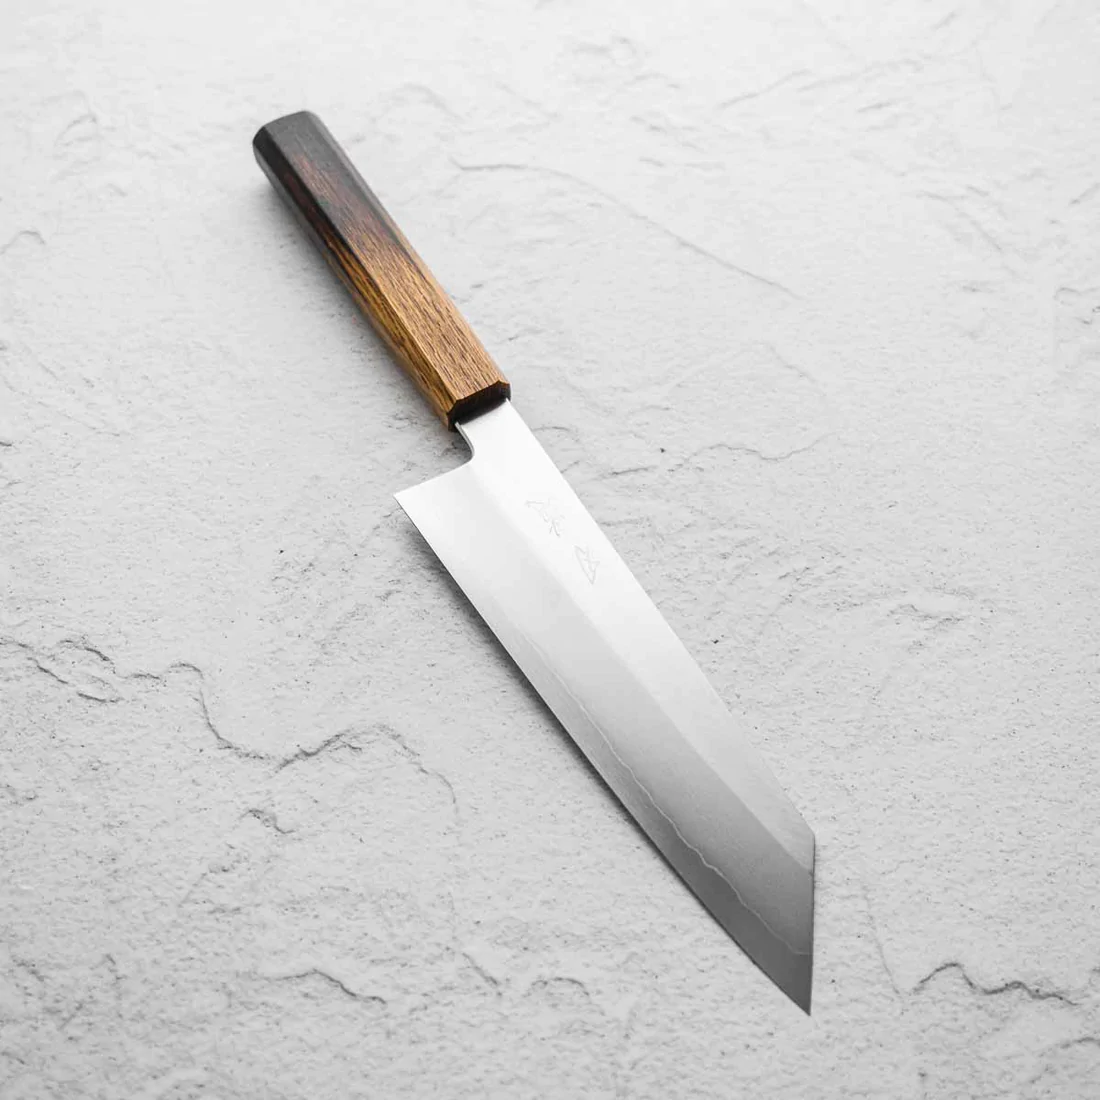 Best Bunka Knife